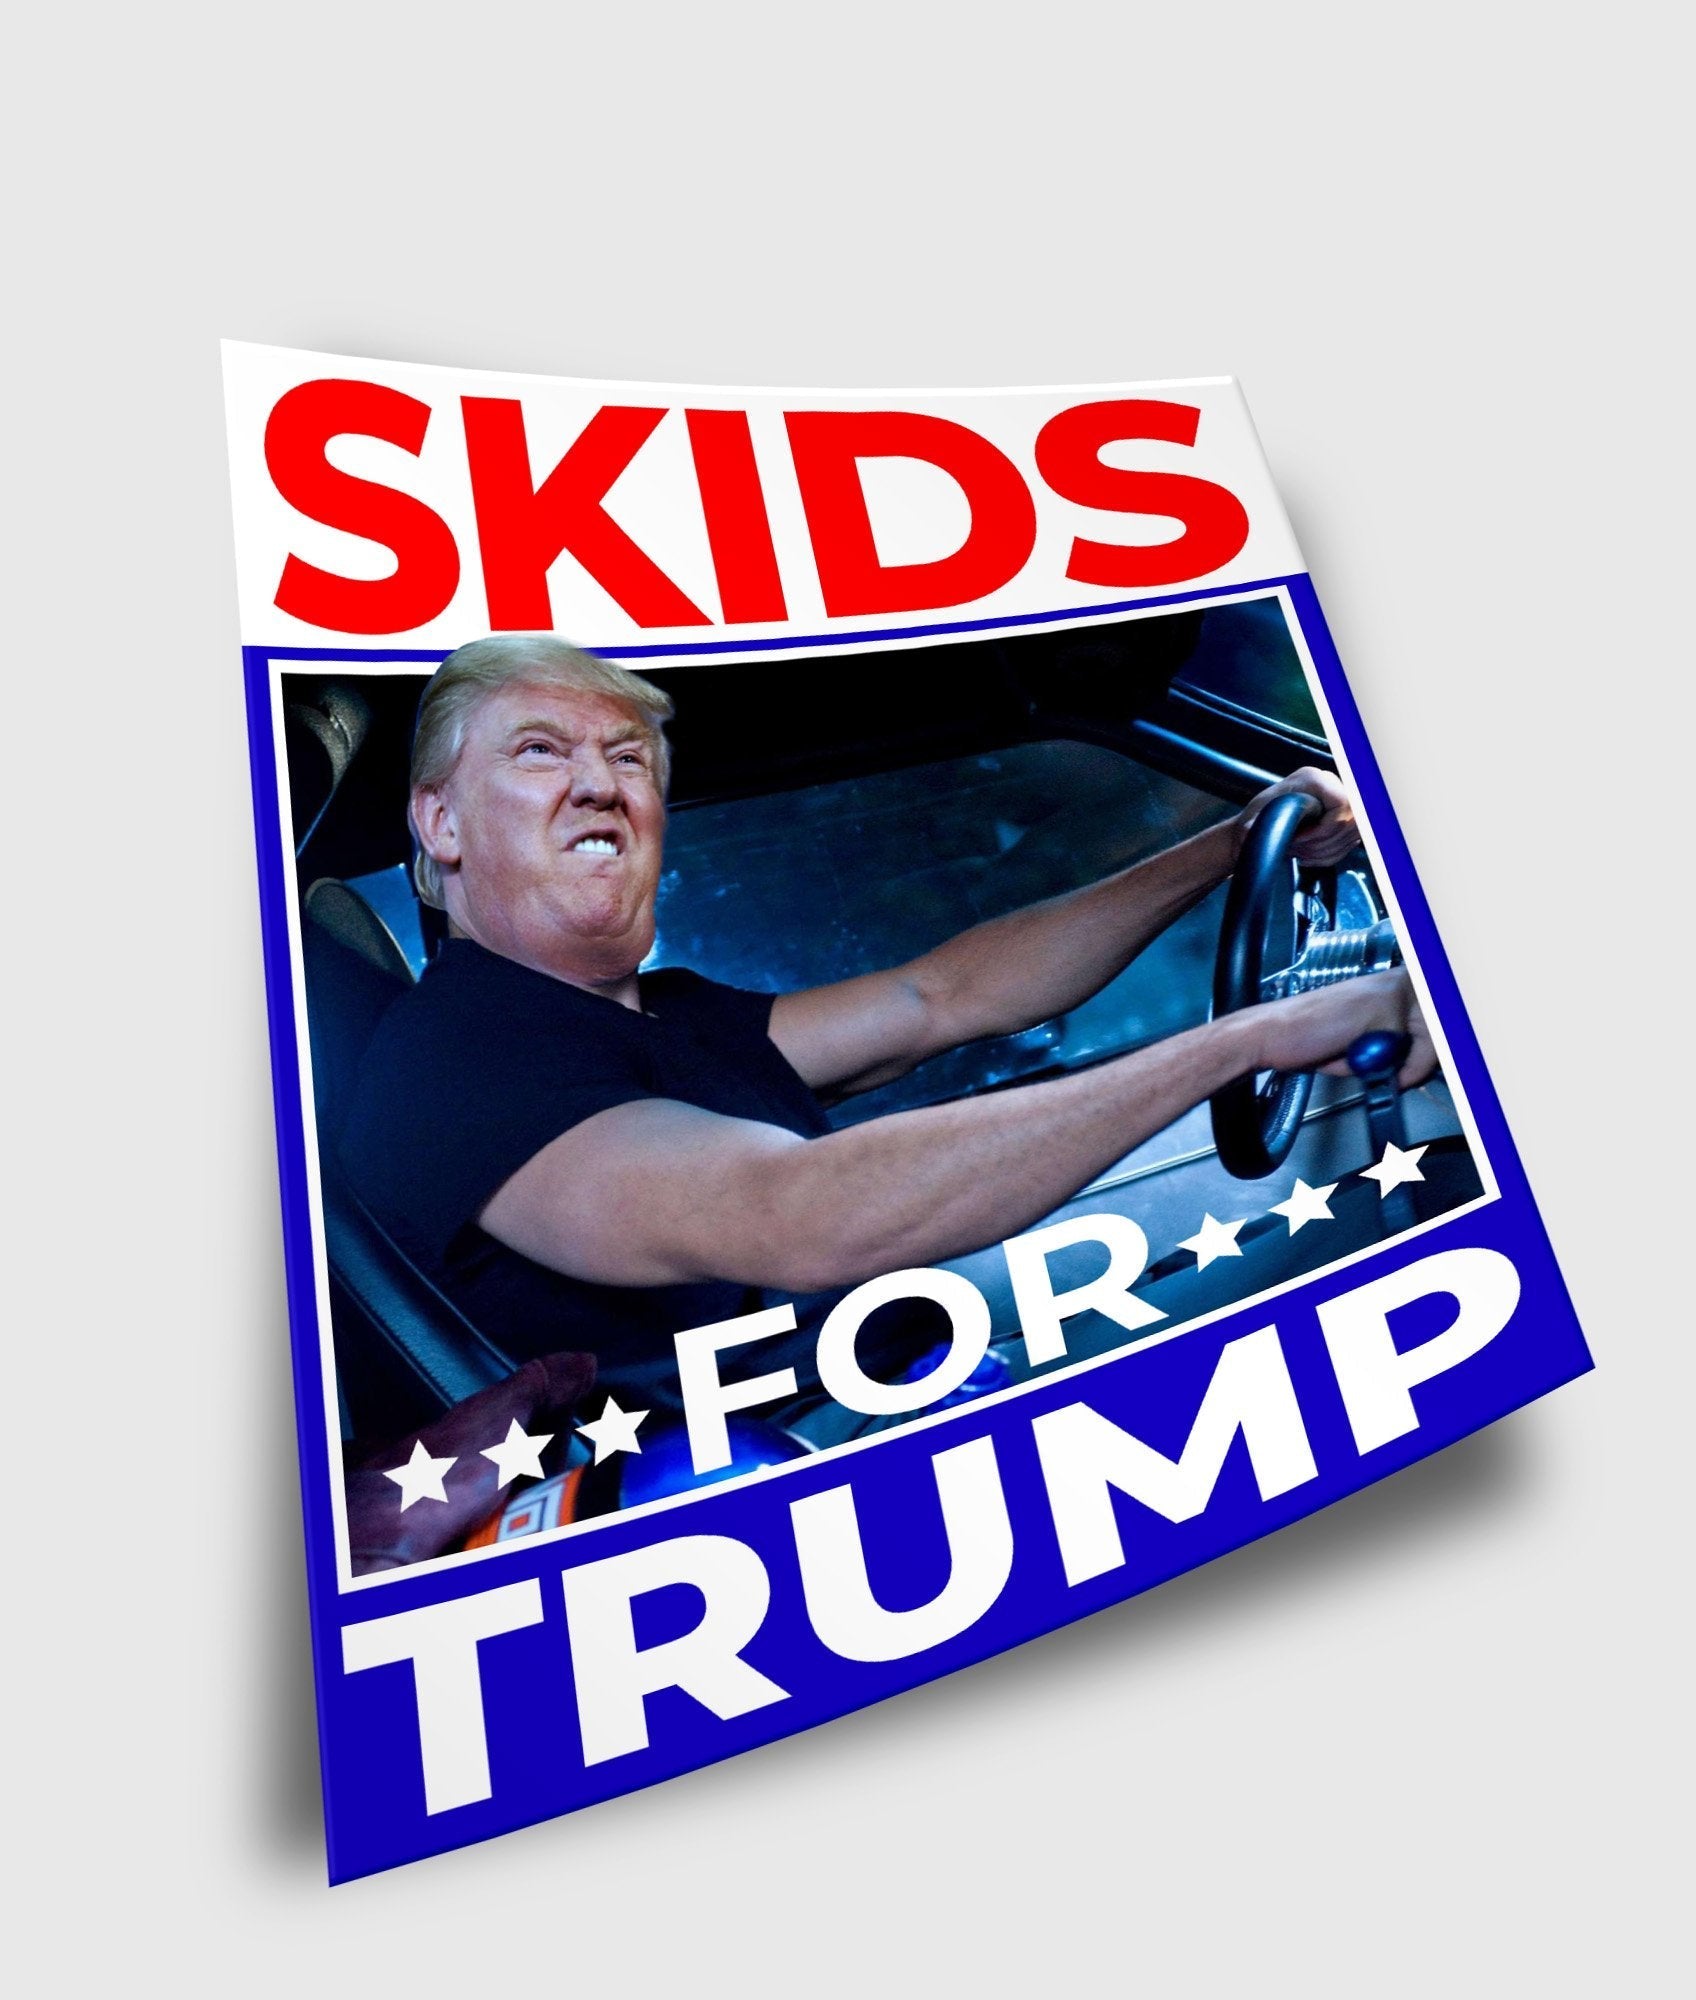 Skids for Trump - Hardtuned